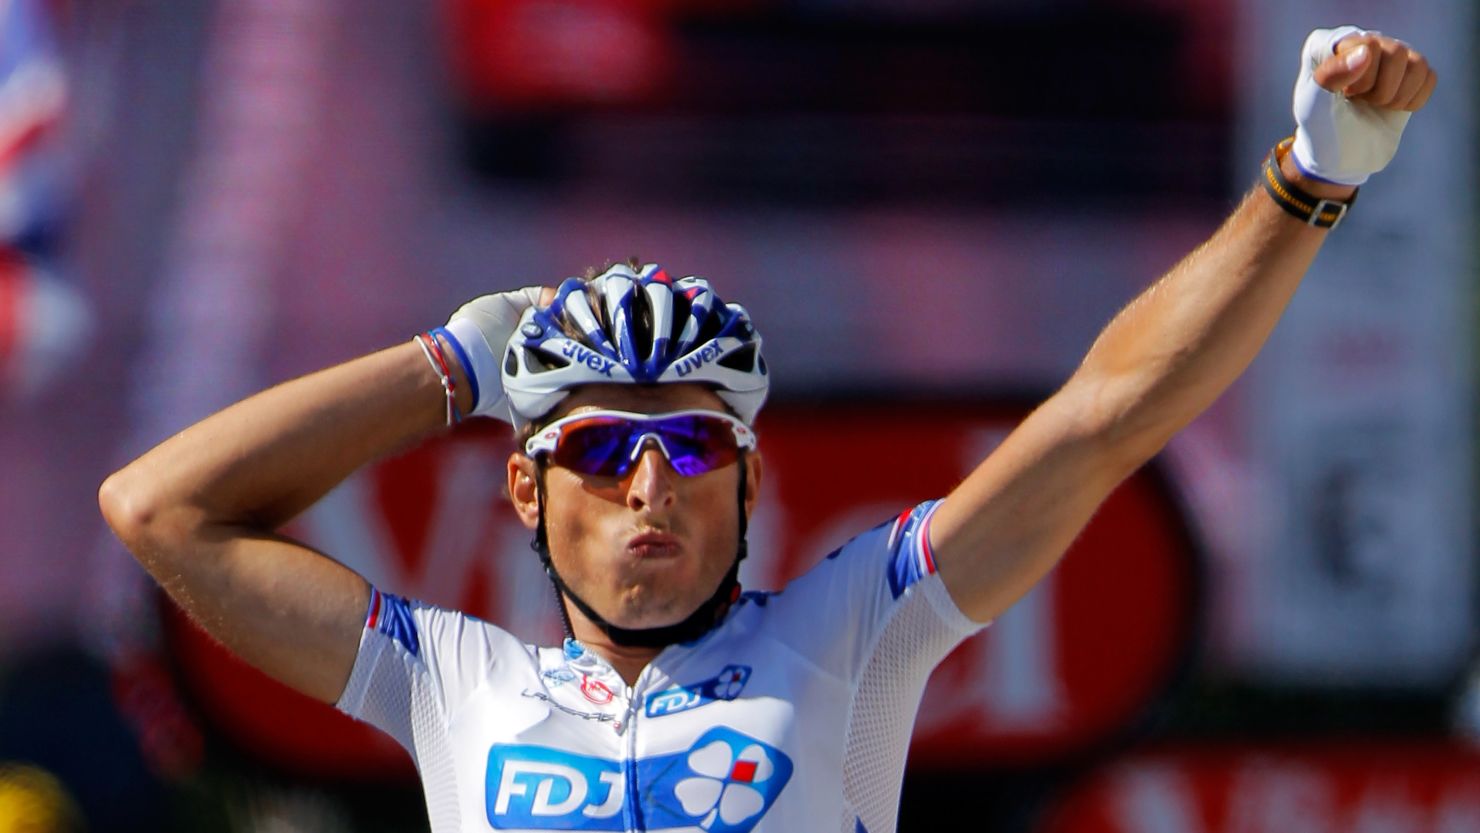 Pierrick Fedrigo of France celebrates winning stage 15 of the Tour de France